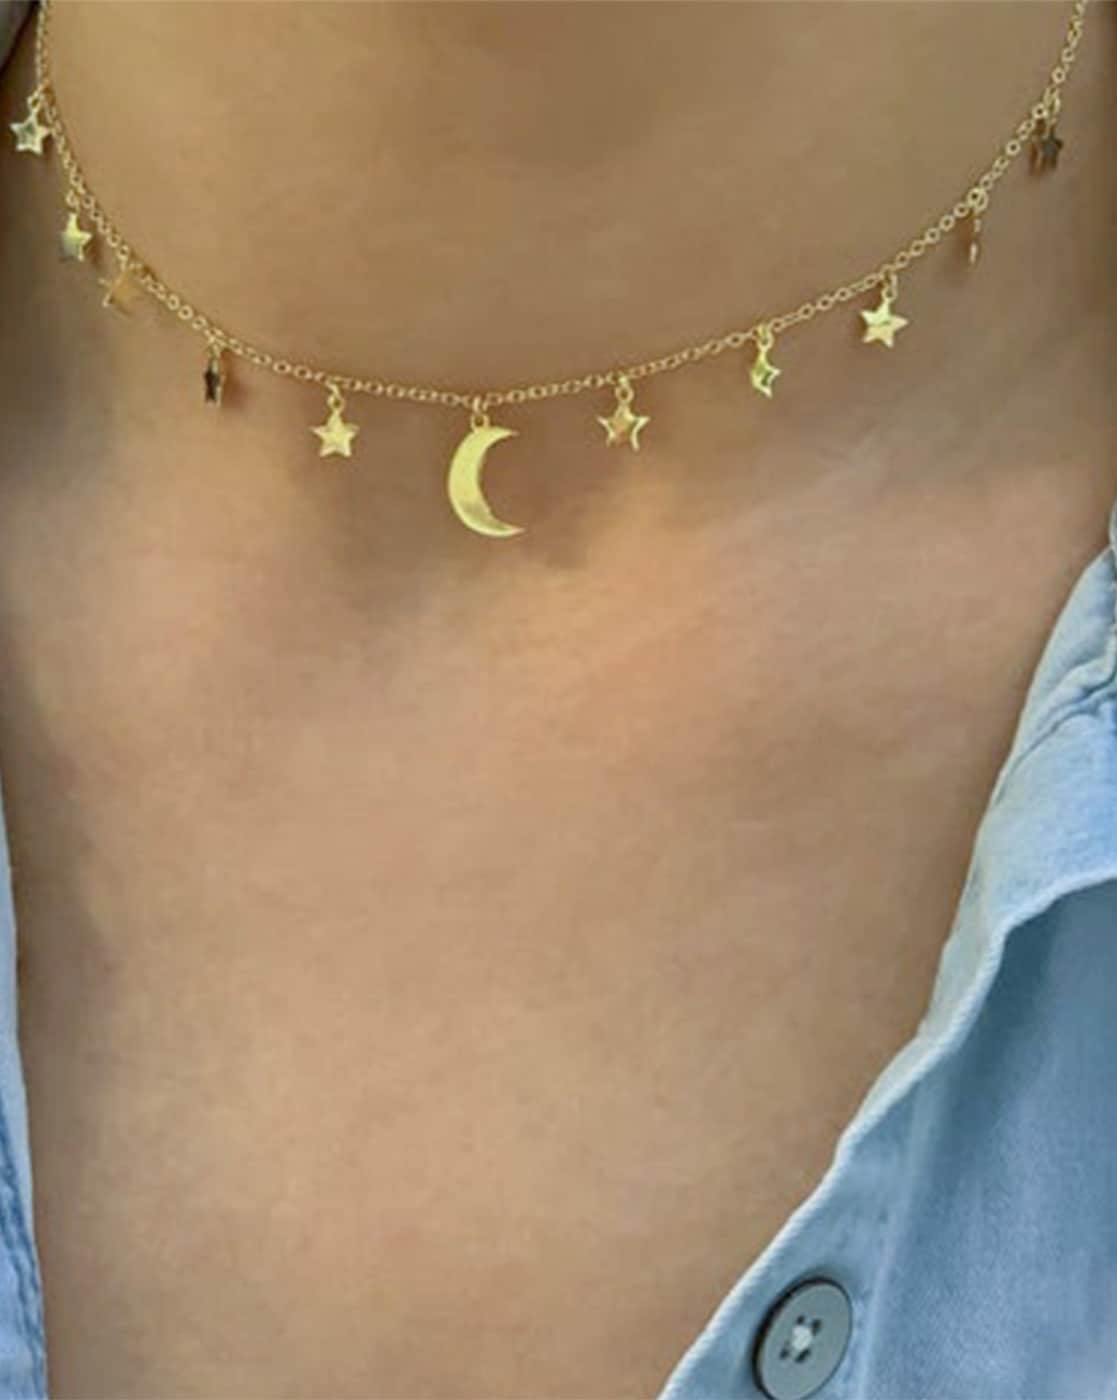 New Moon Necklace Metal Details Multi Layered Women's Golden Choker Necklace  - Milanoo.com